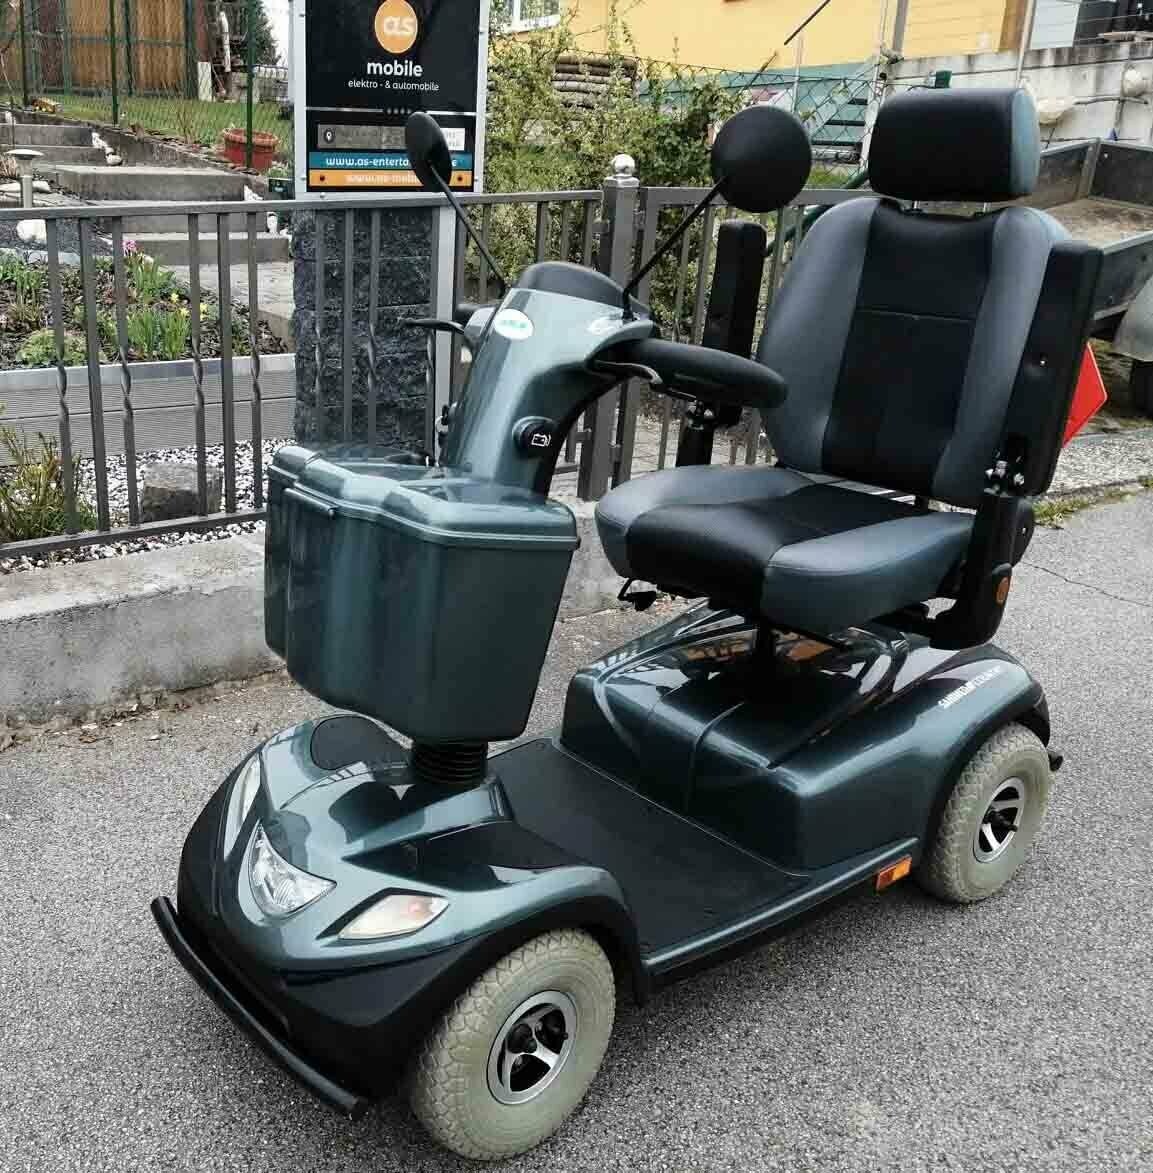 Elektromobil Seniorenmobil SANIMED Country * gebraucht & geprüft✔ 15 km/h * Scooter